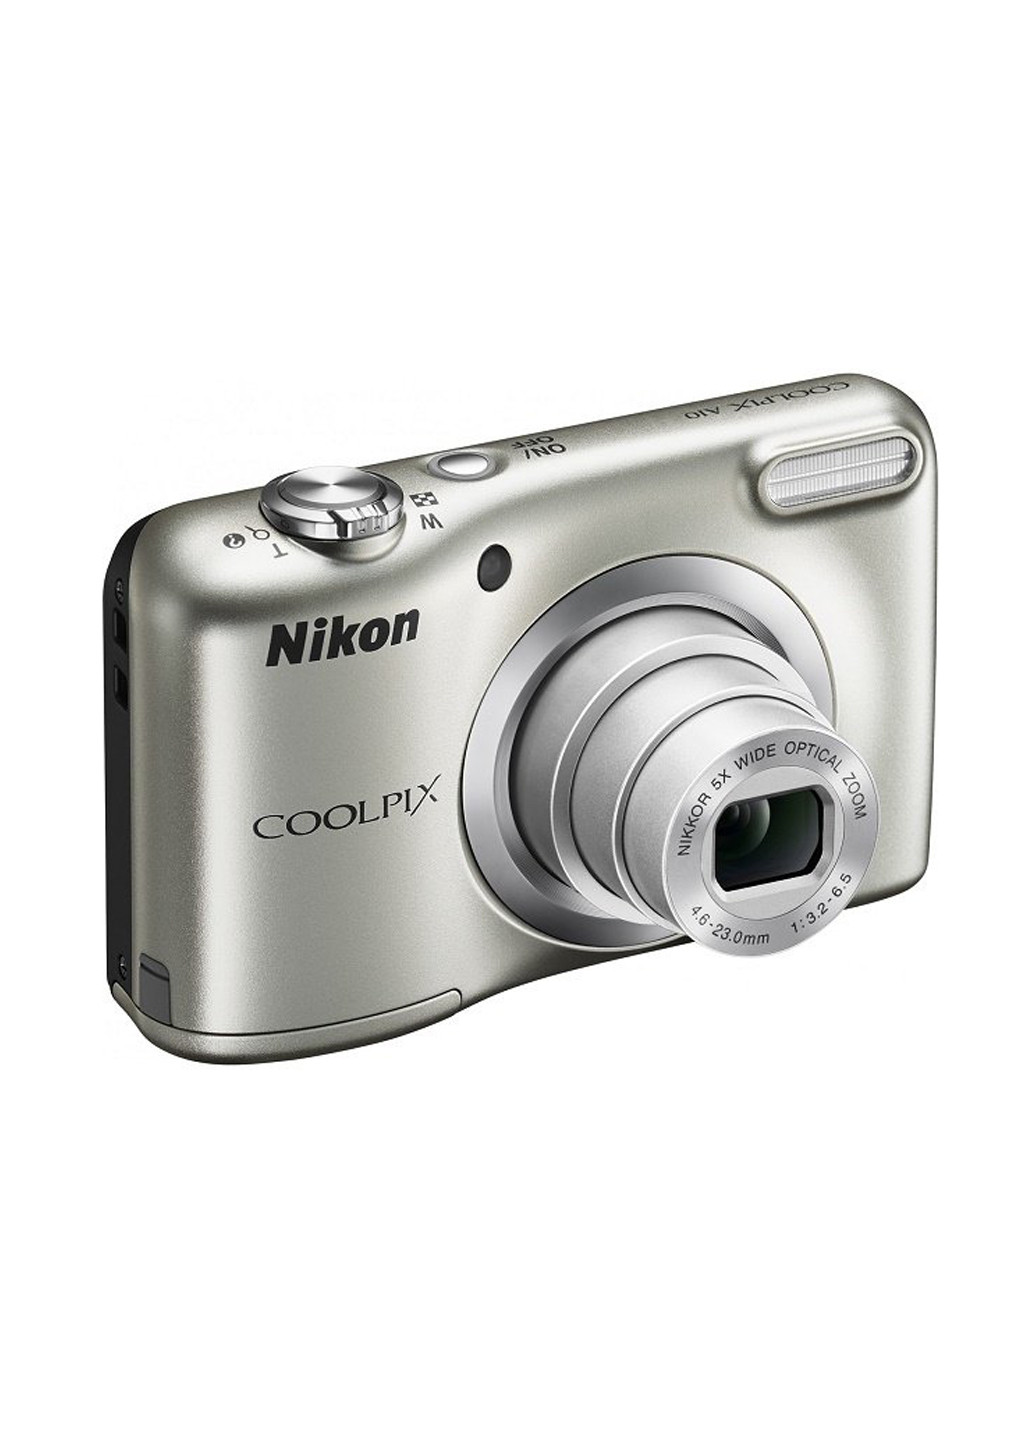 Компактная фотокамера Nikon coolpix a10 silver (132999719)